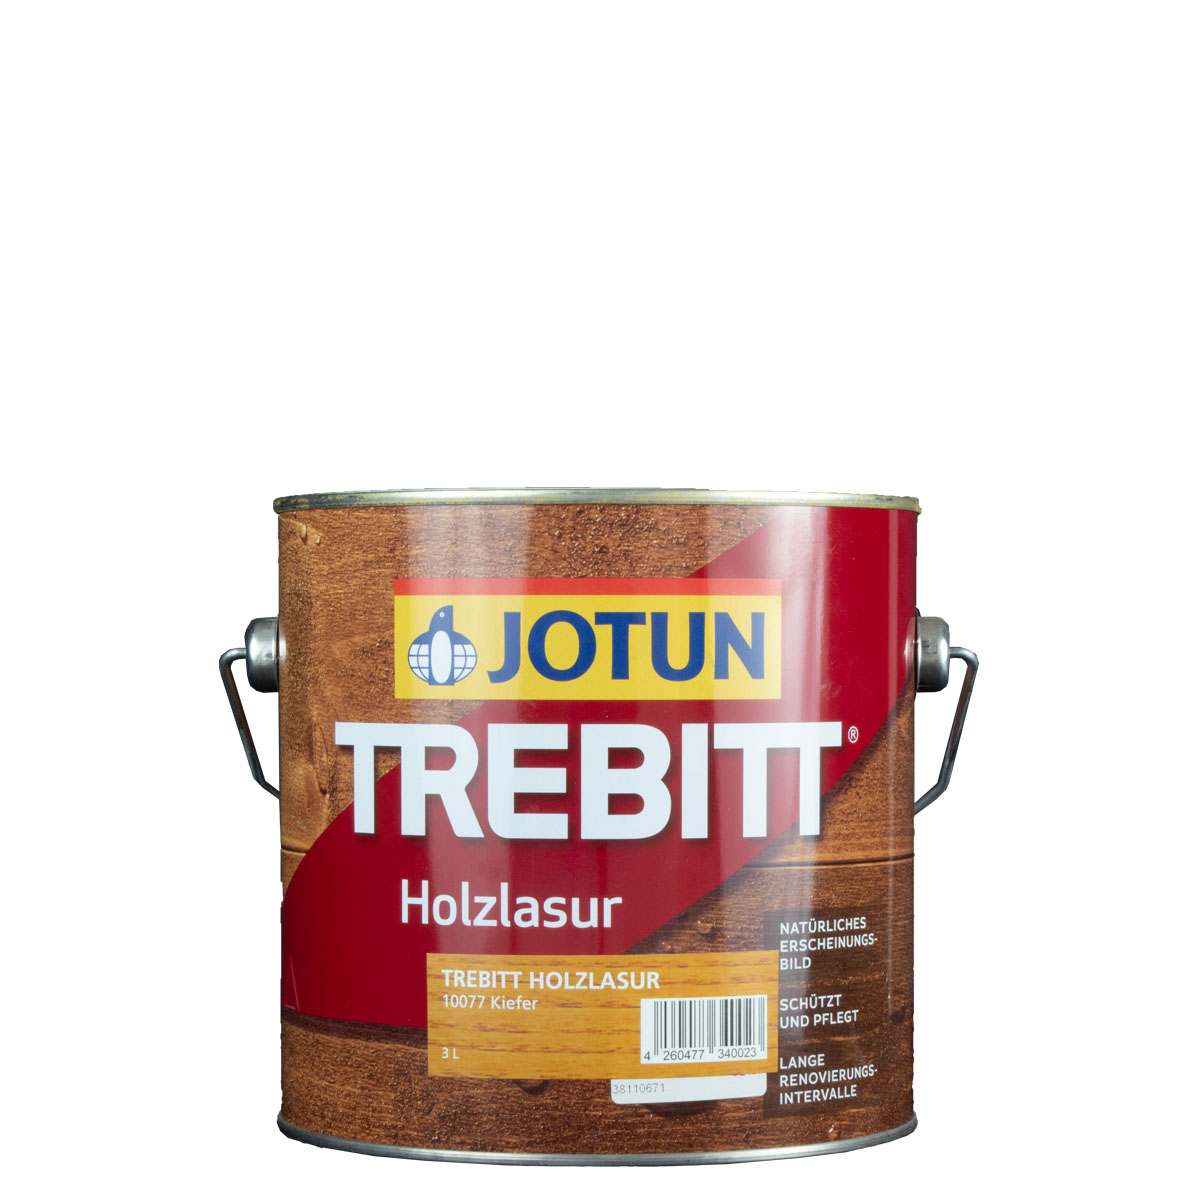 Jotun Trebitt 3L teak 623, Holzschutzlasur